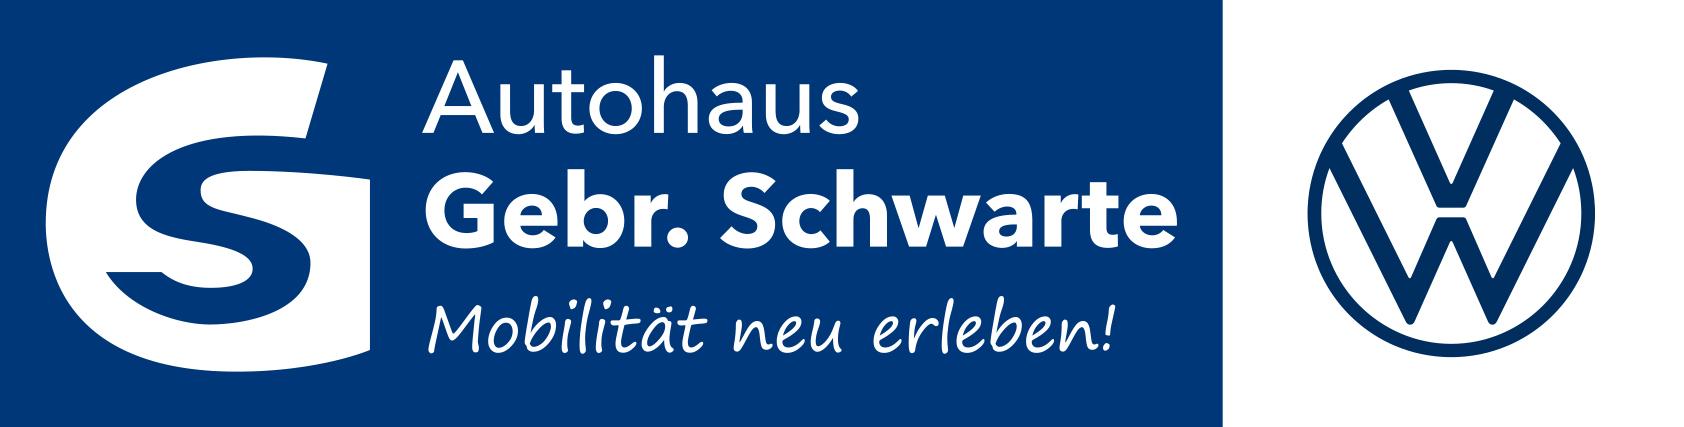 Schwarte_neu